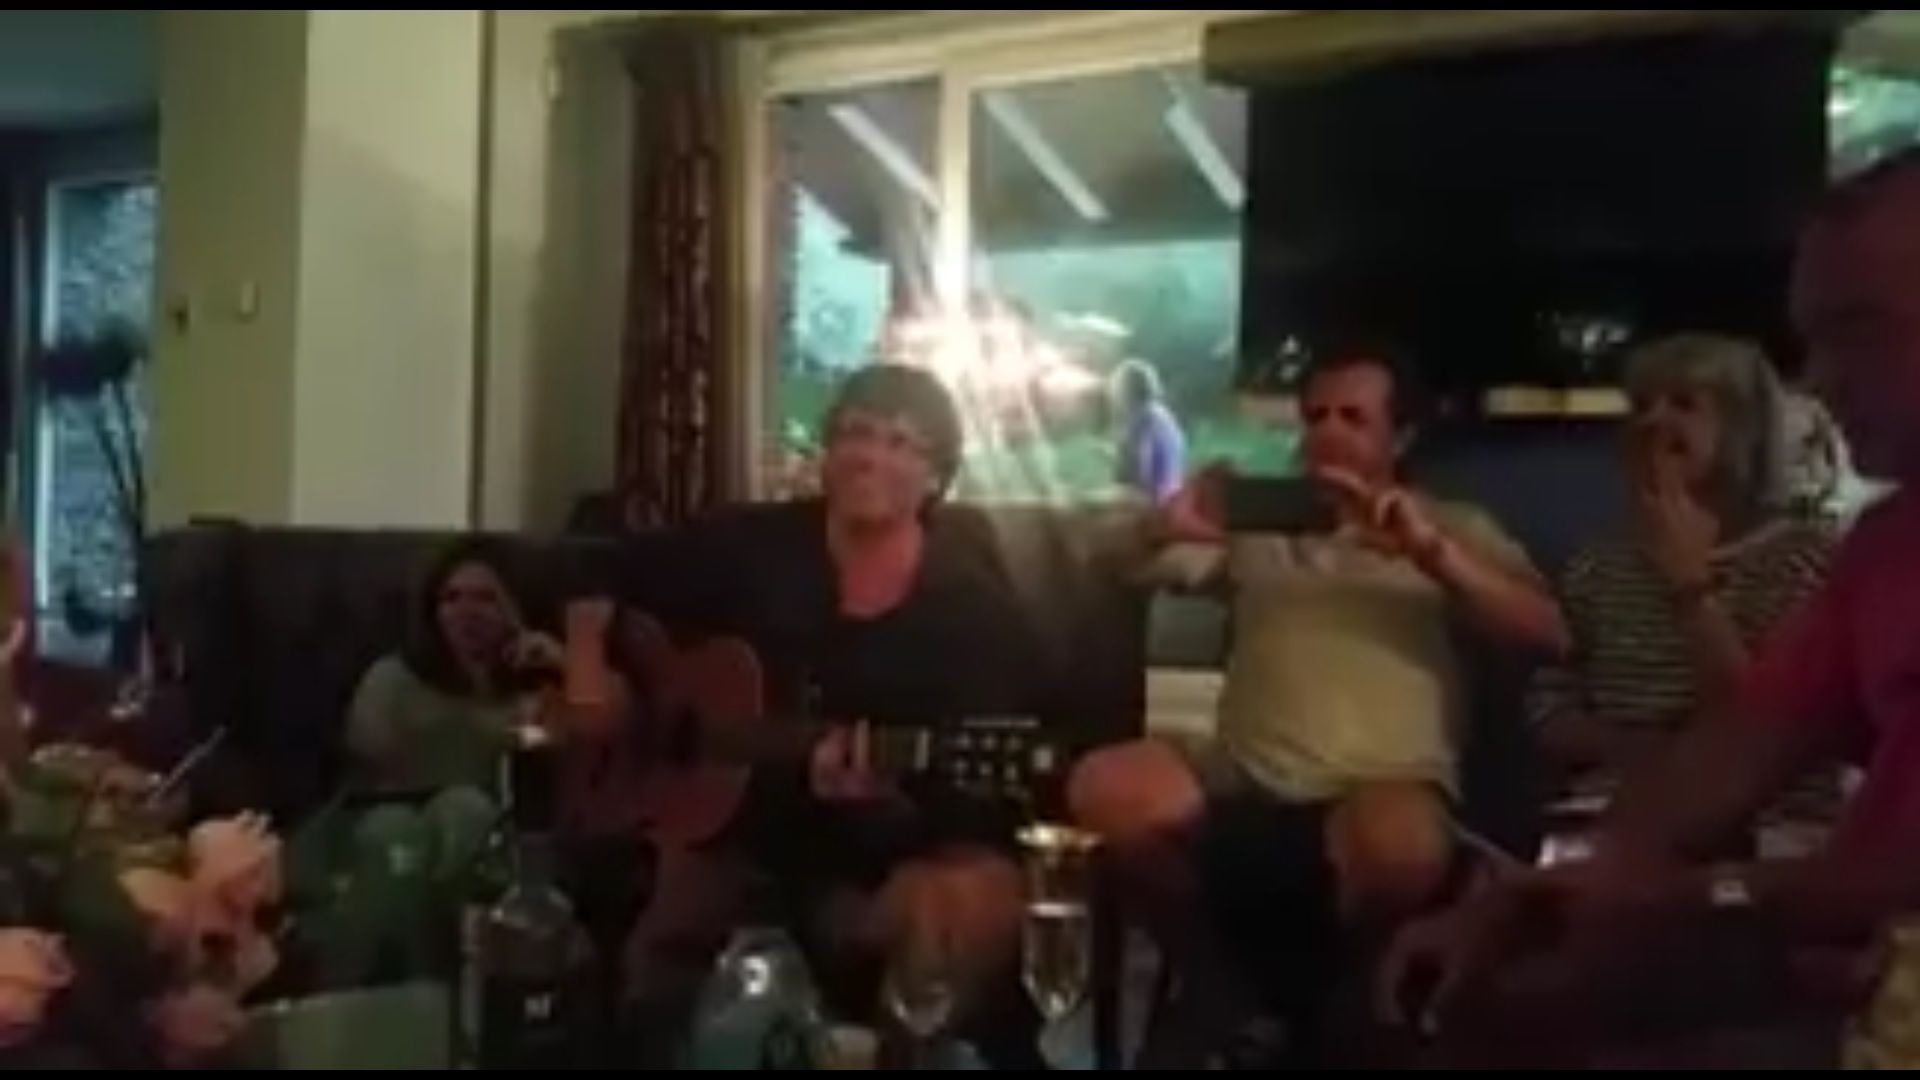 Puigdemont toca la guitarra en una fiesta privada en Cadaqués